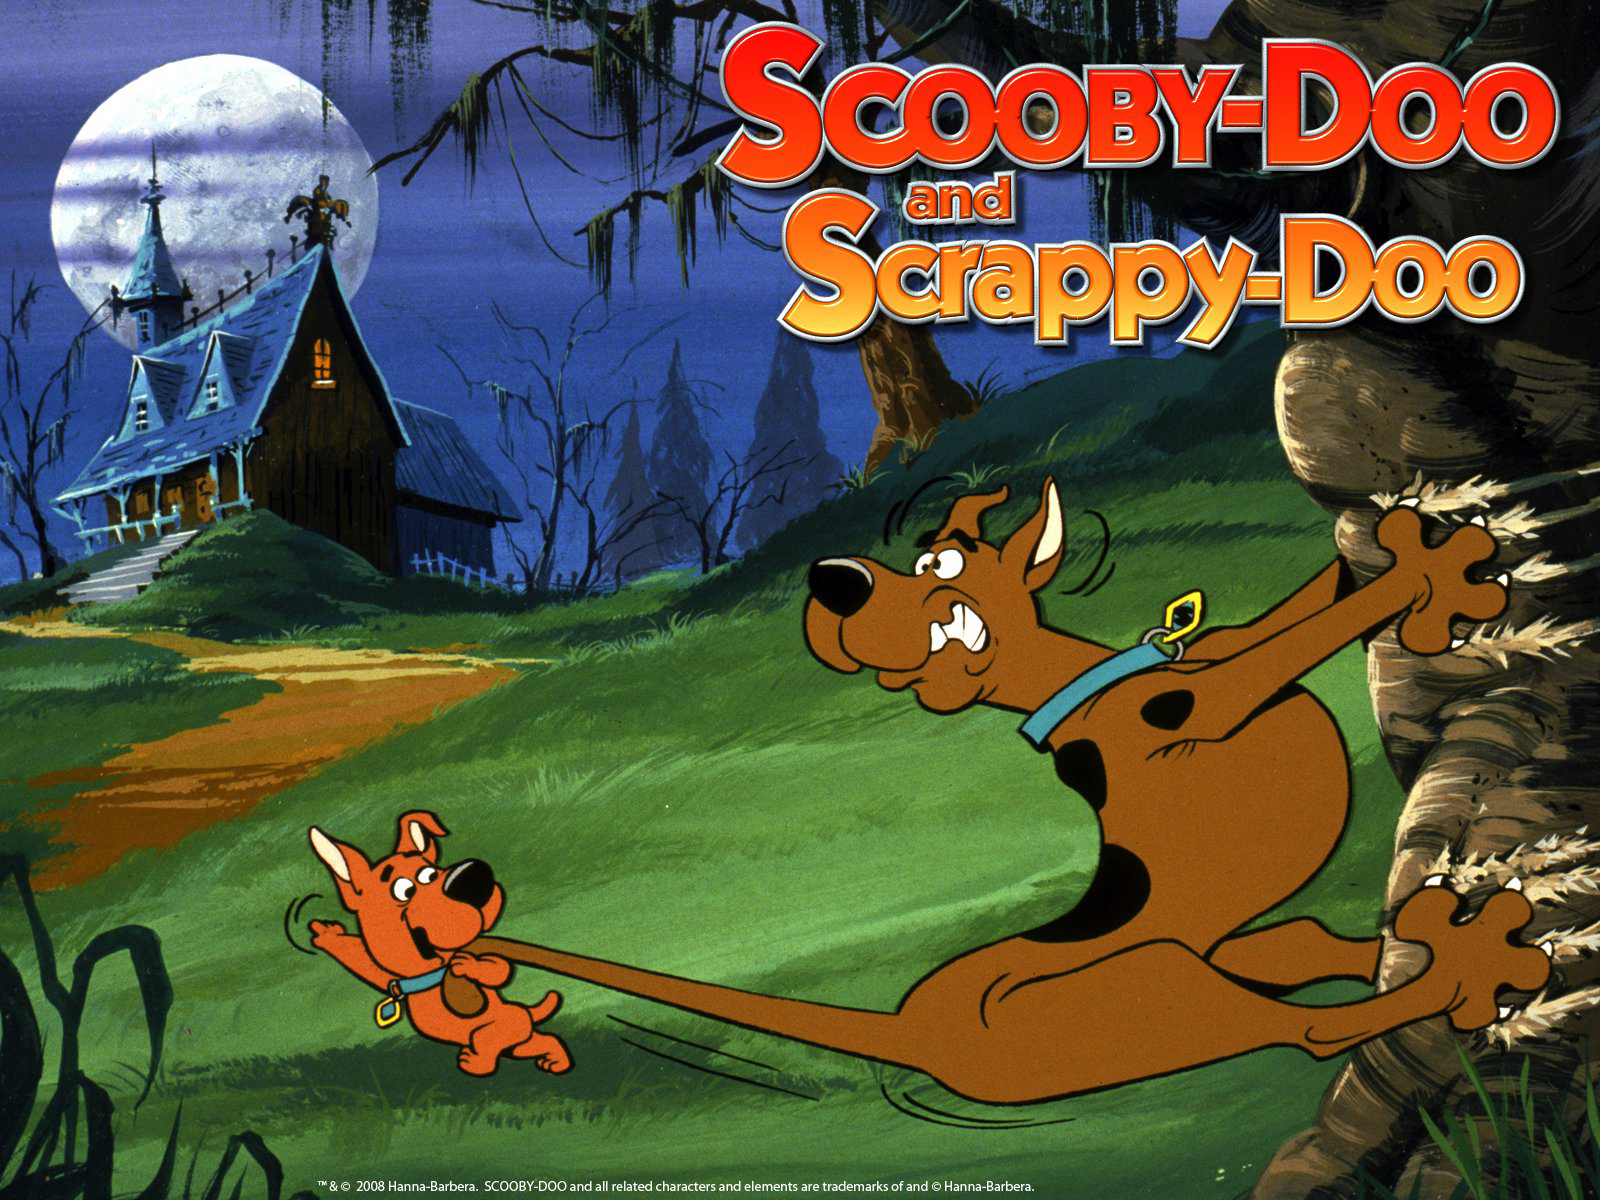 Scooby-Doo and Scrappy-Doo (Season 4) / Scooby-Doo and Scrappy-Doo (Season 4) (1982)